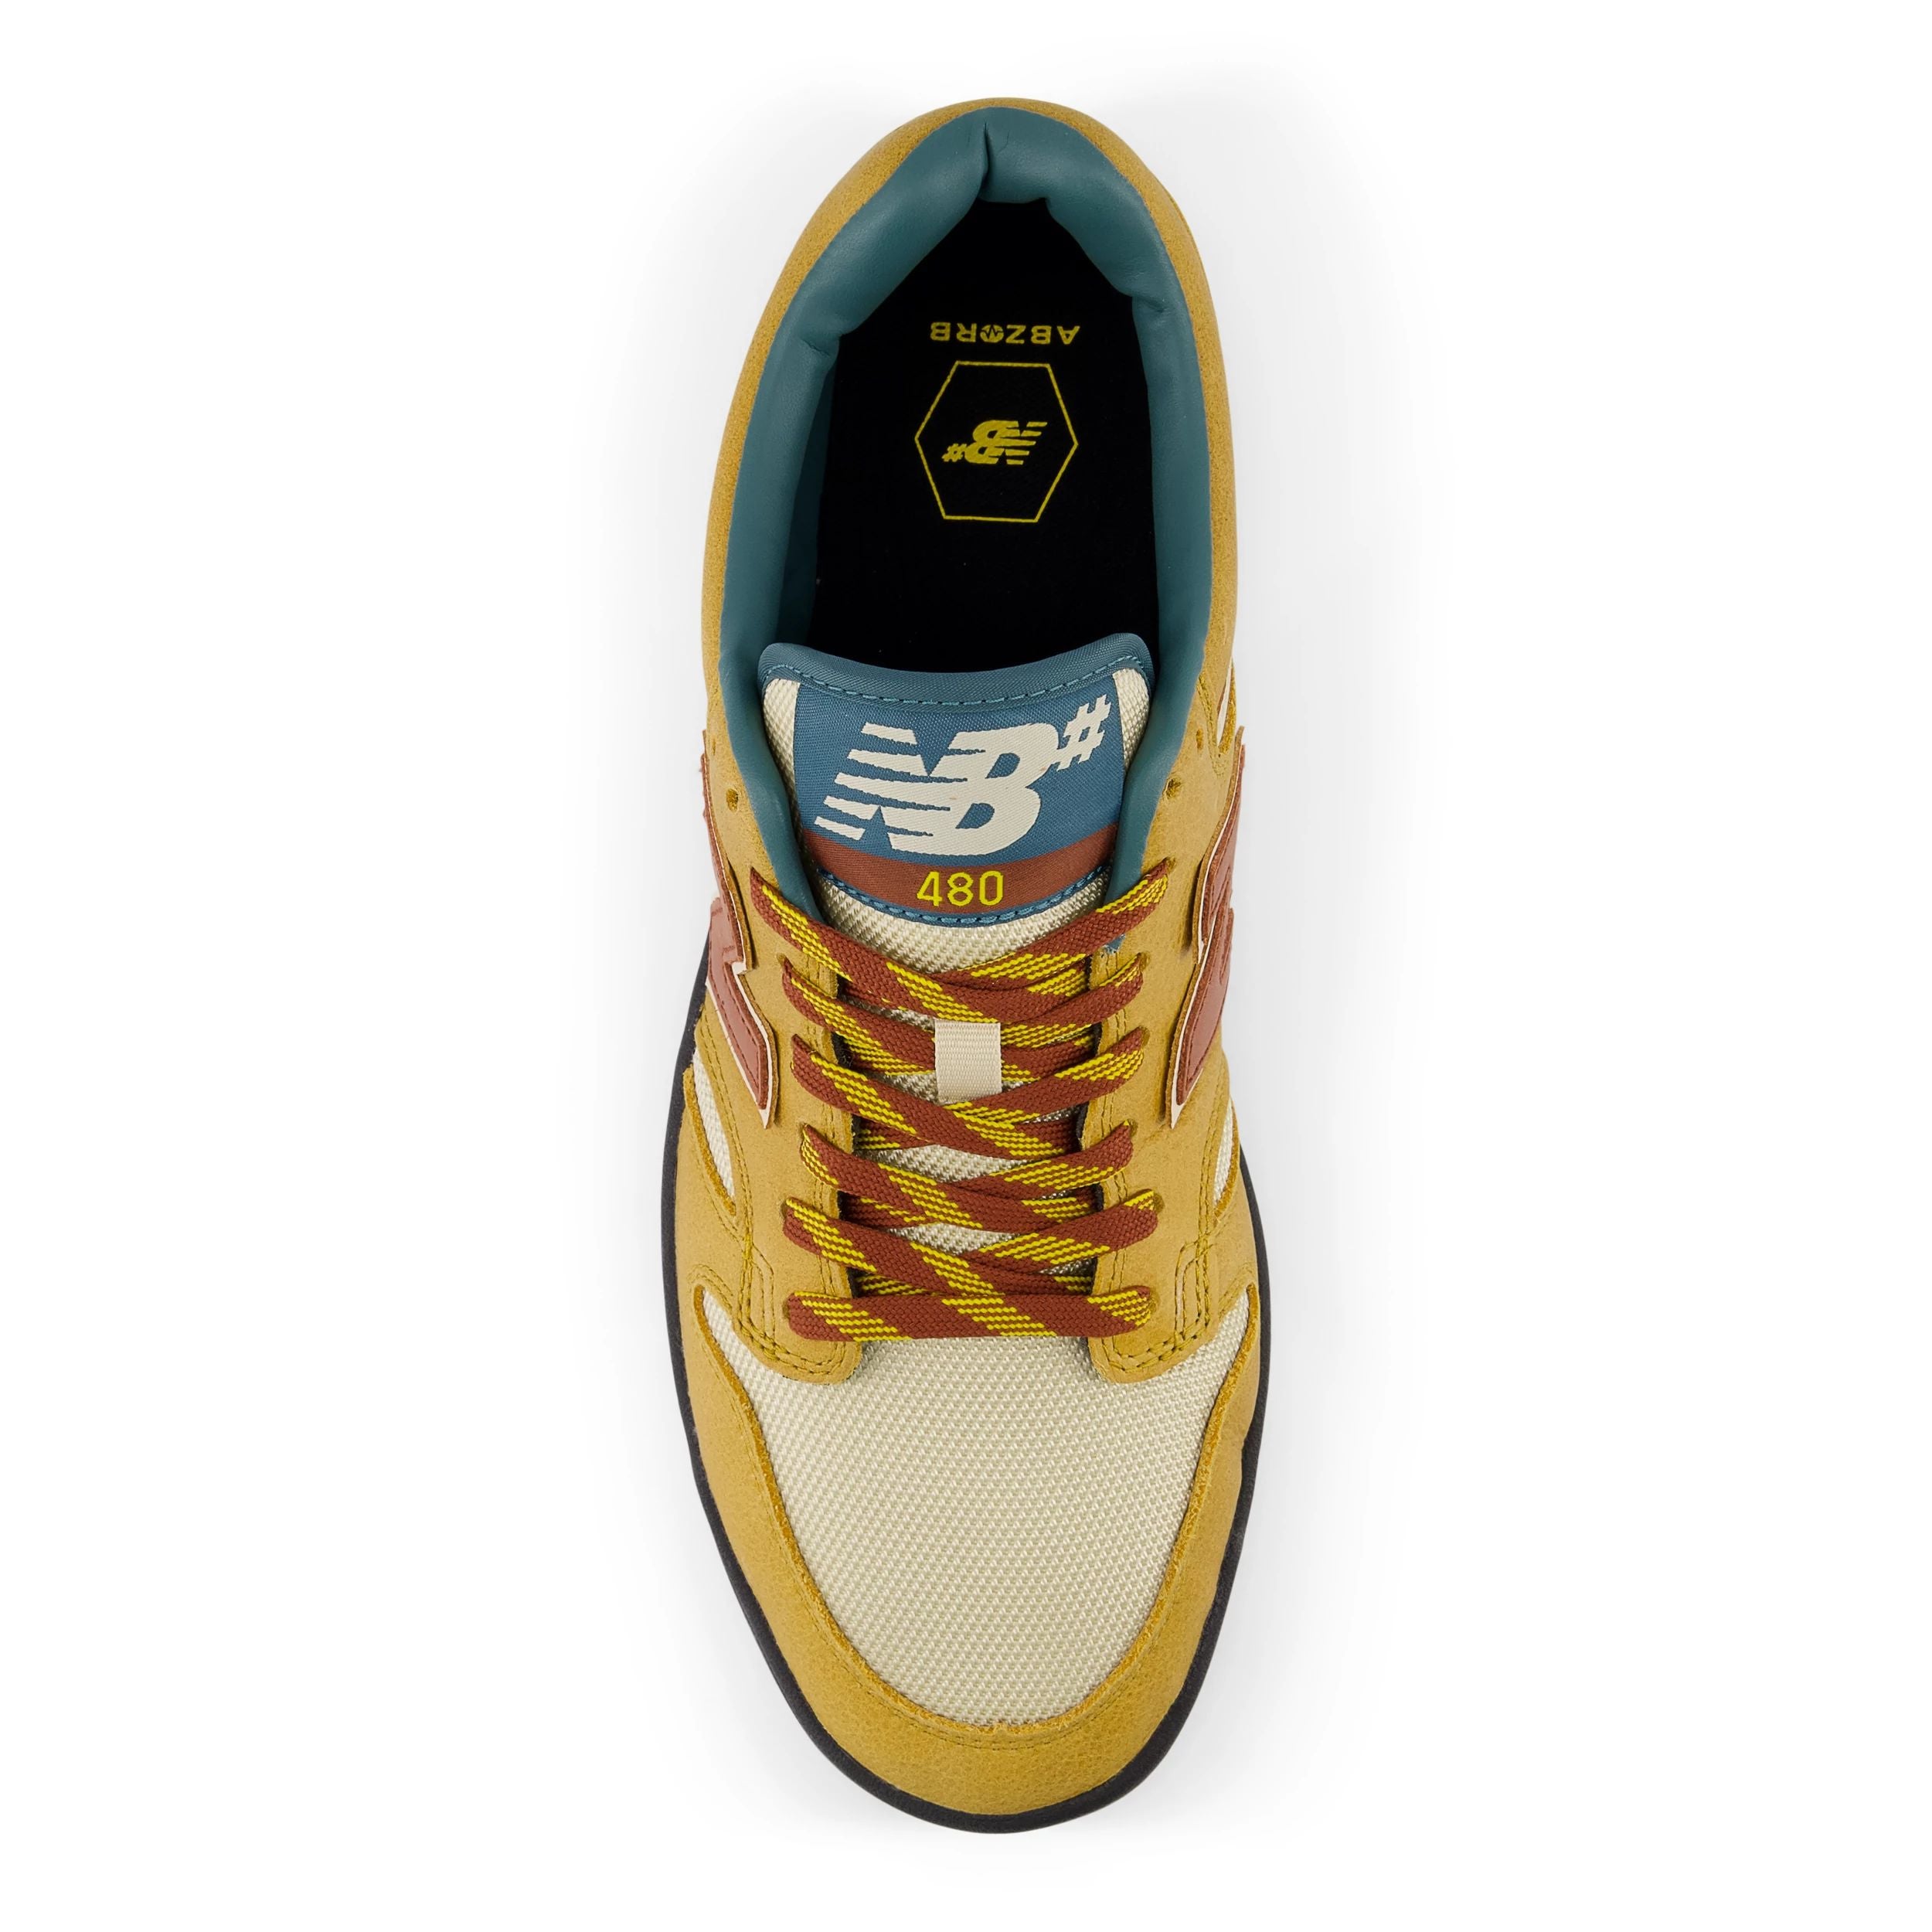 Brown/Green NB Numeric 480 Skate Shoe Top